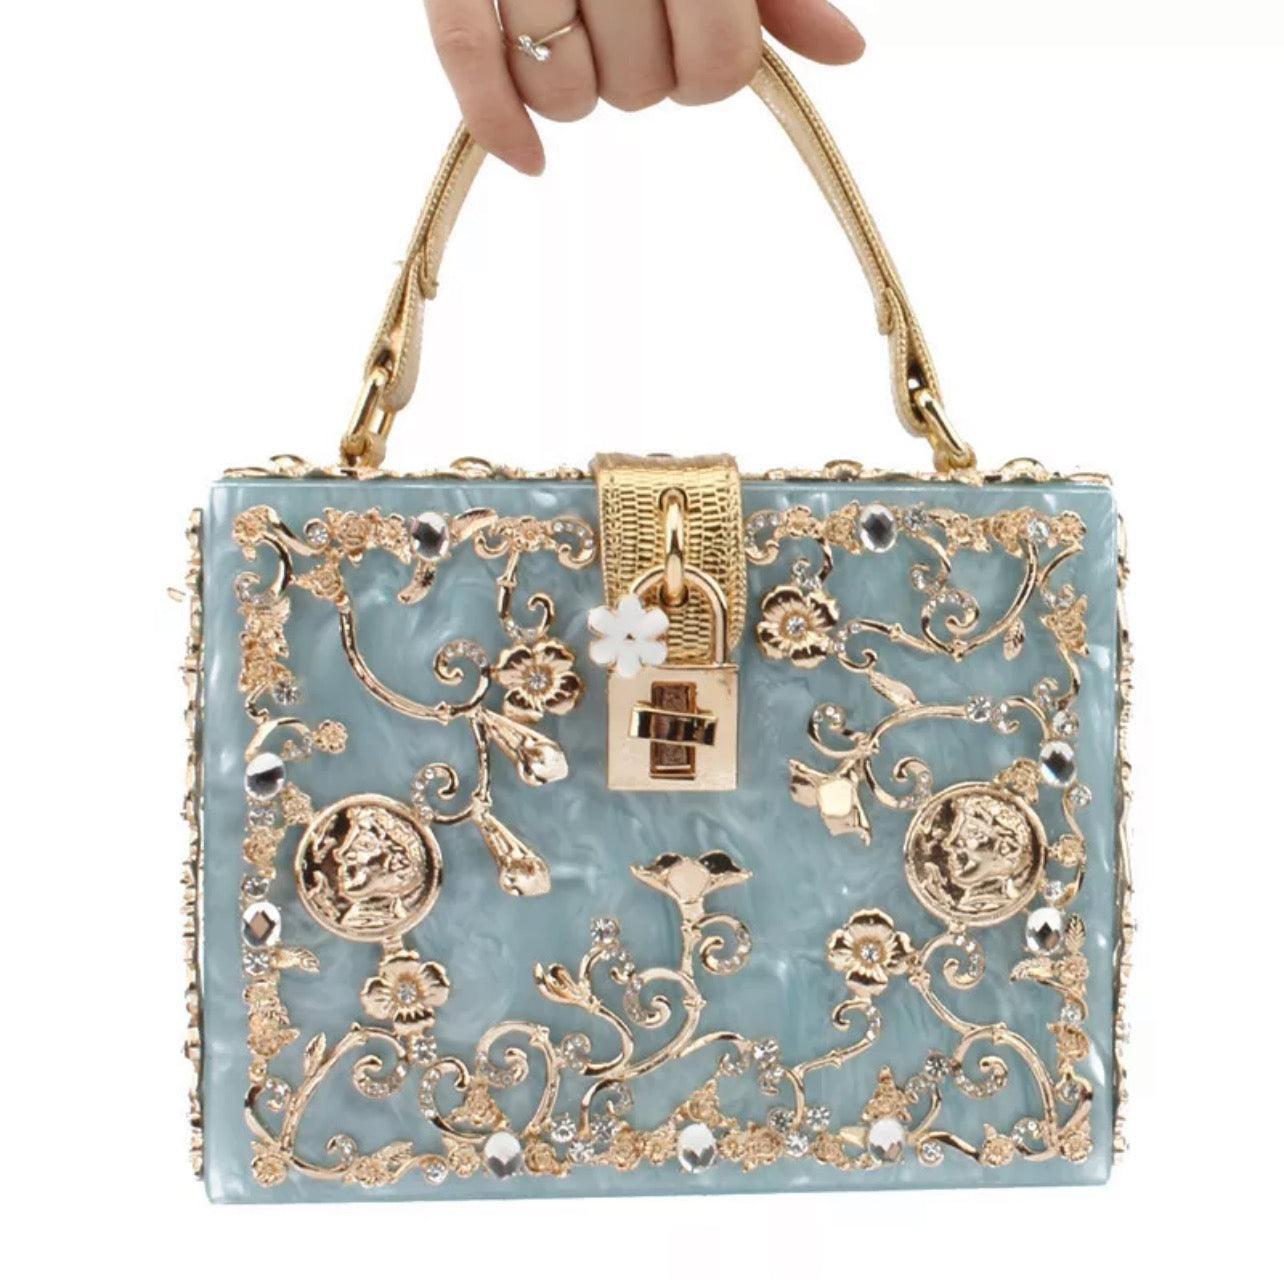 Acrylic Box Handbag